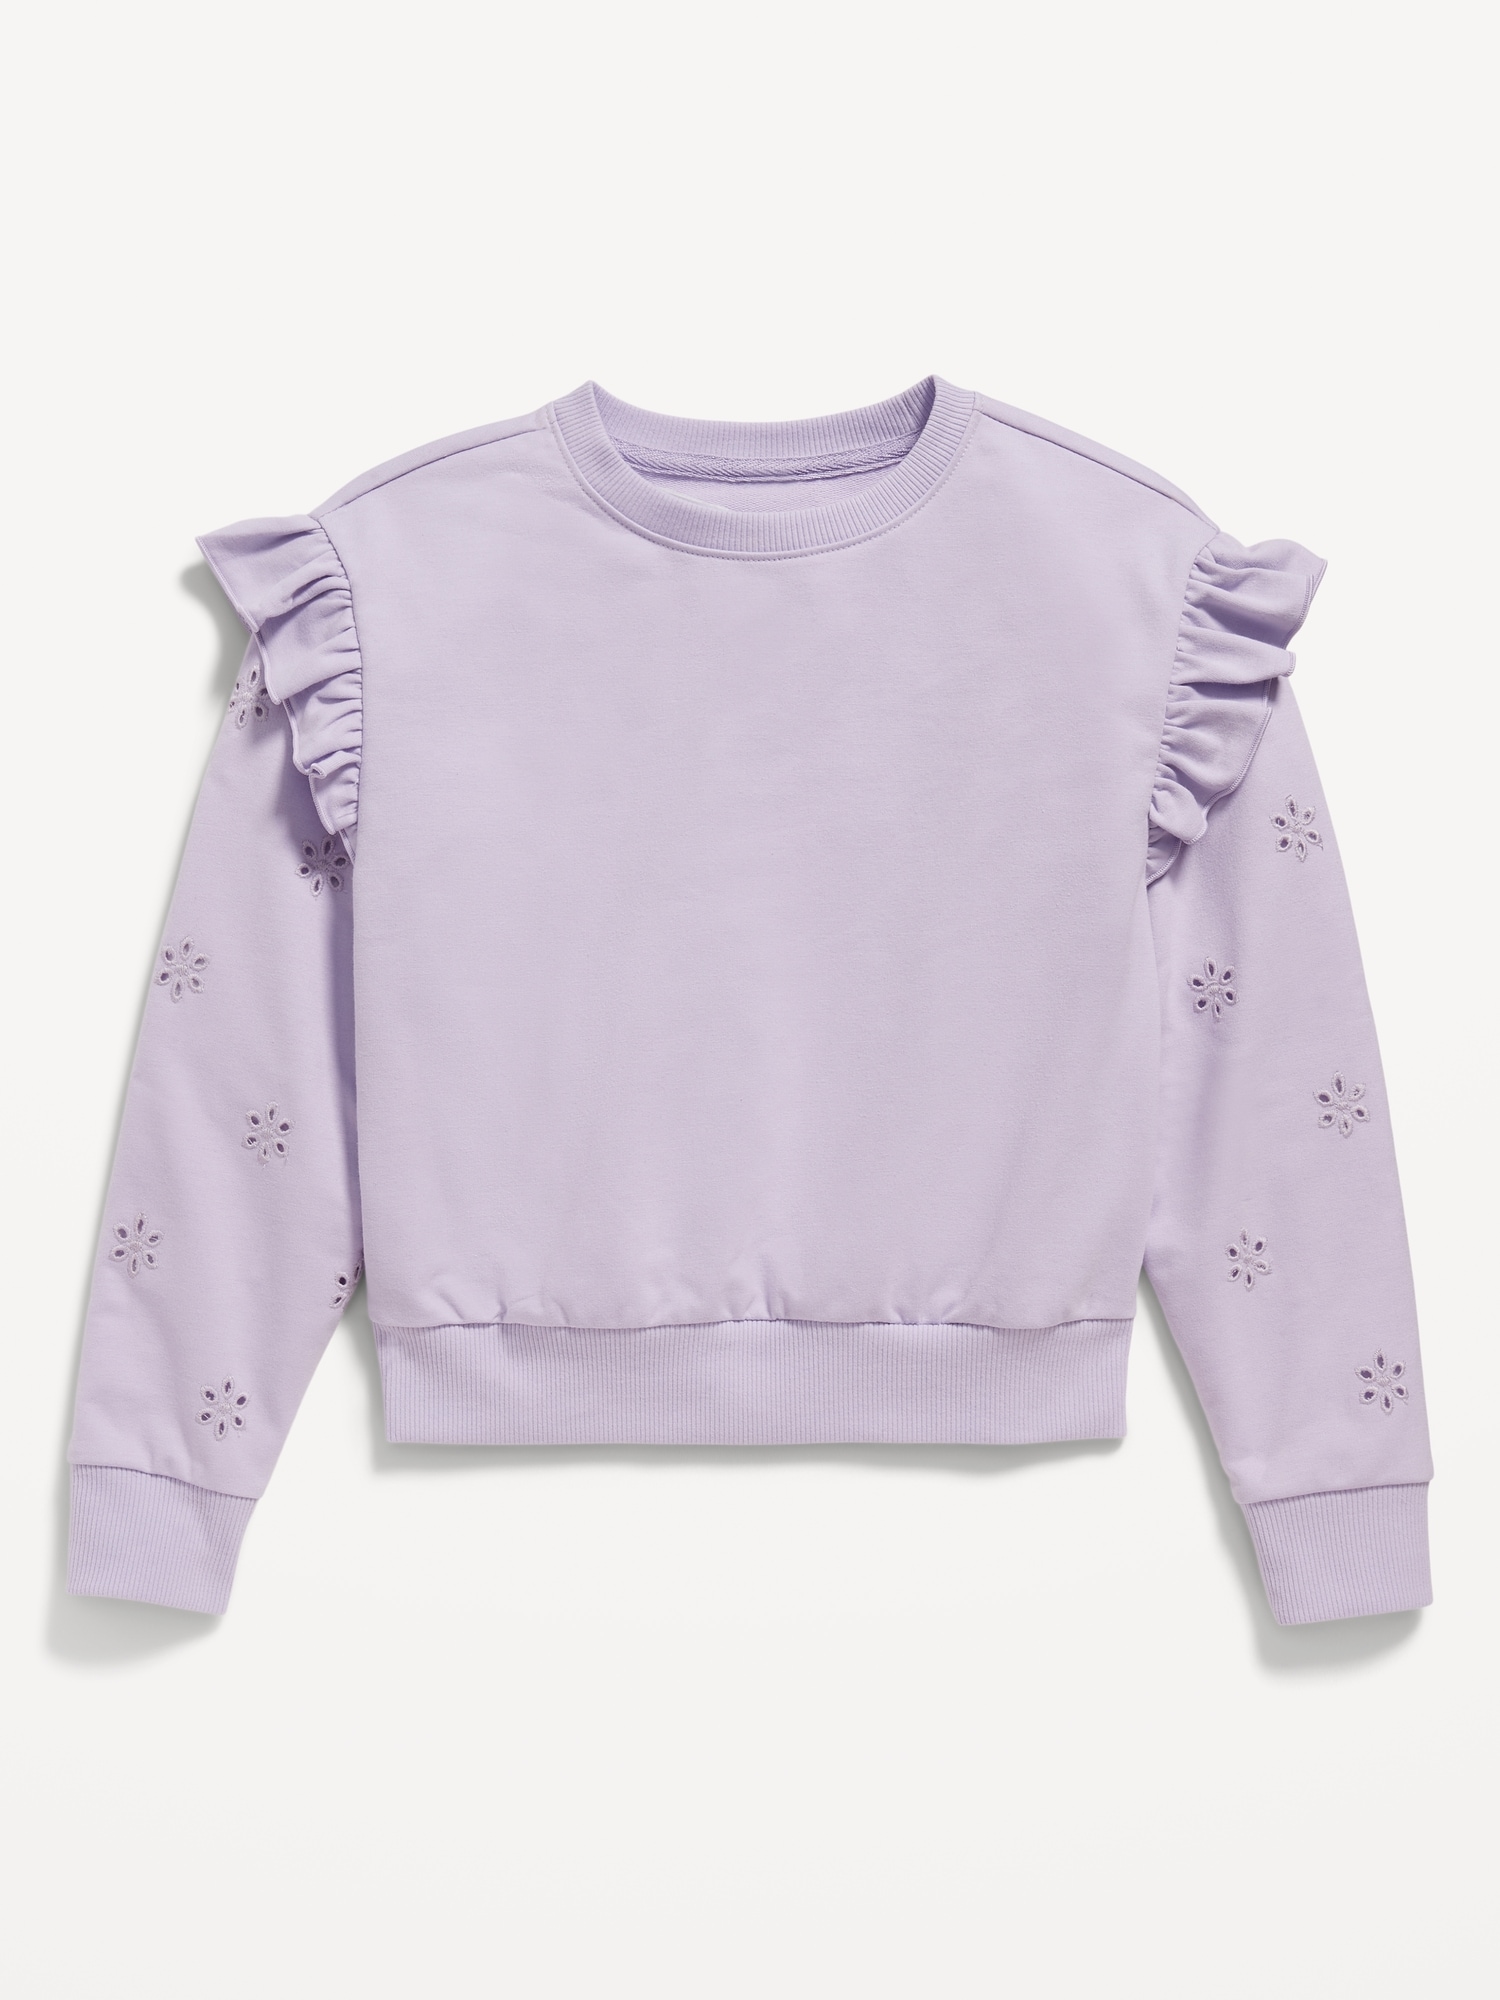 Ruffled Floral-Eyelet Crew-Neck Sweatshirt for Girls